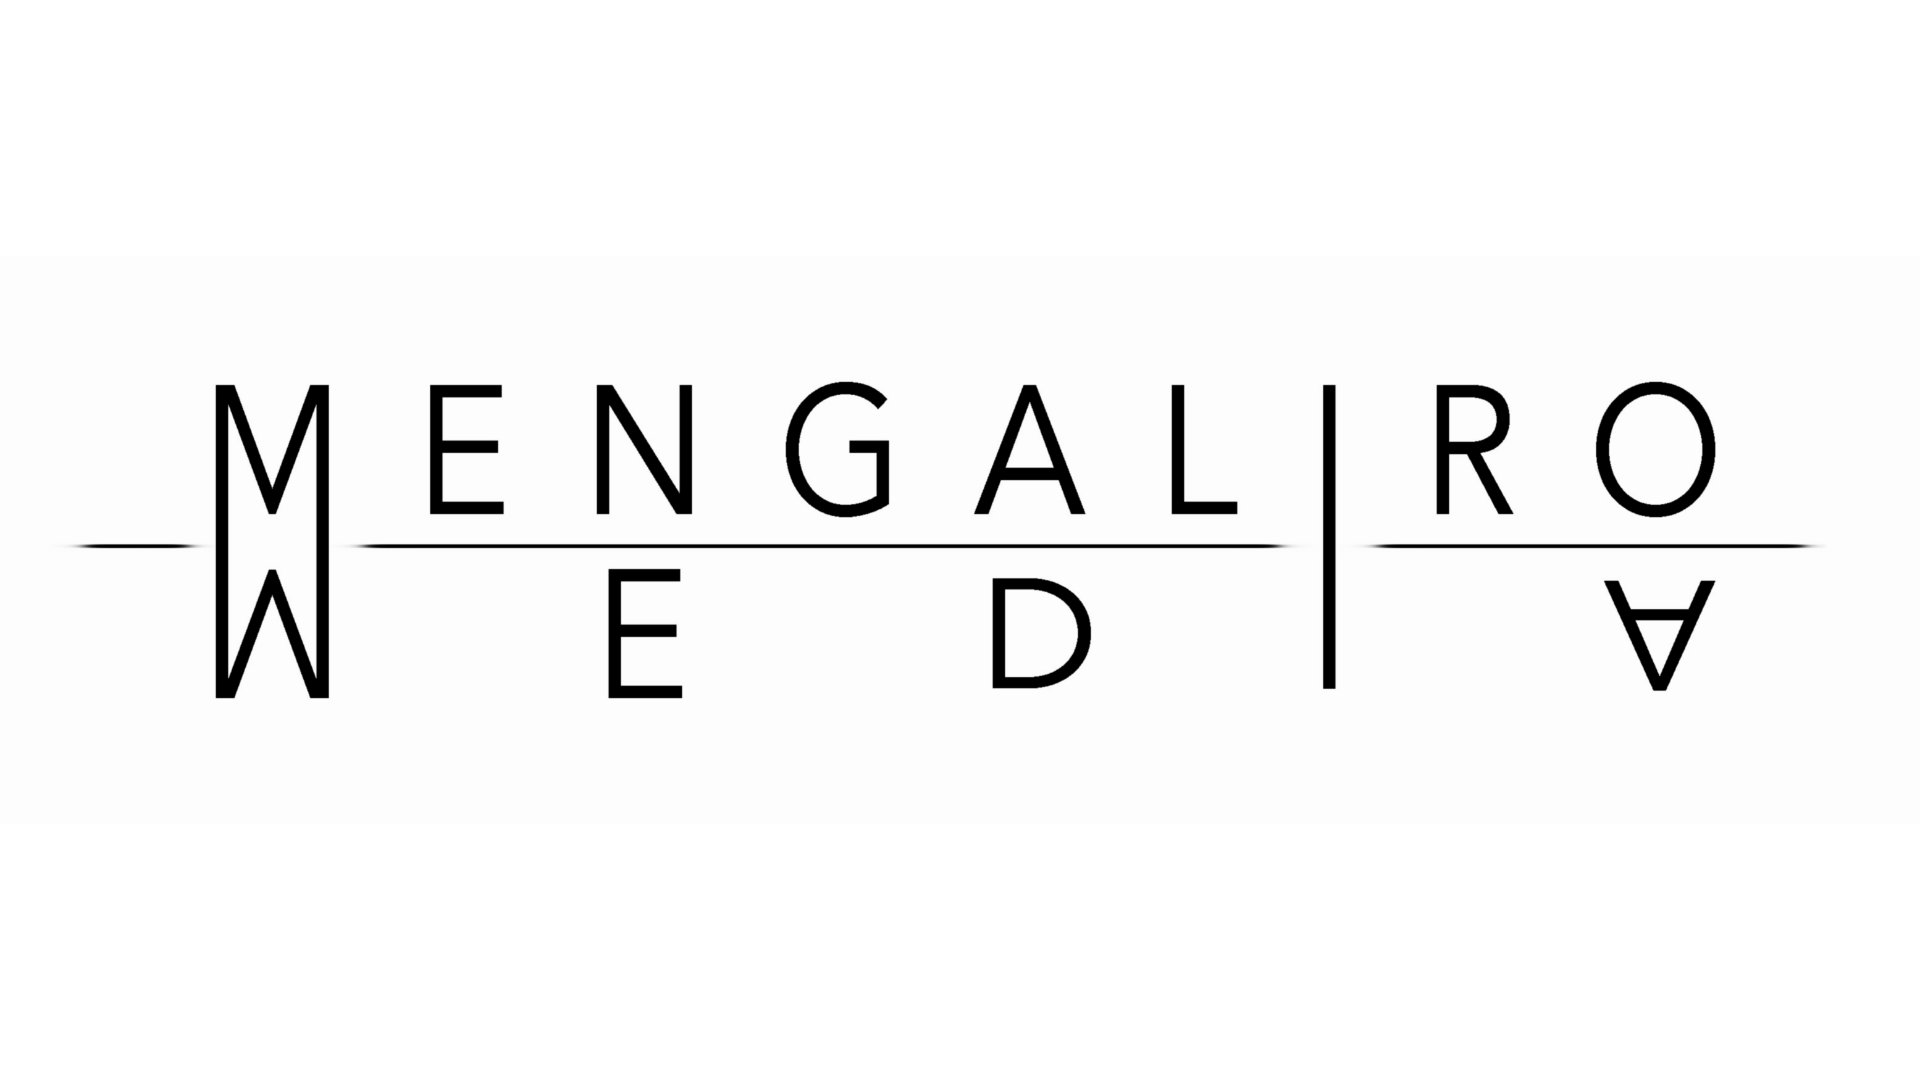 Mengaliro Media Website Logo Black.png